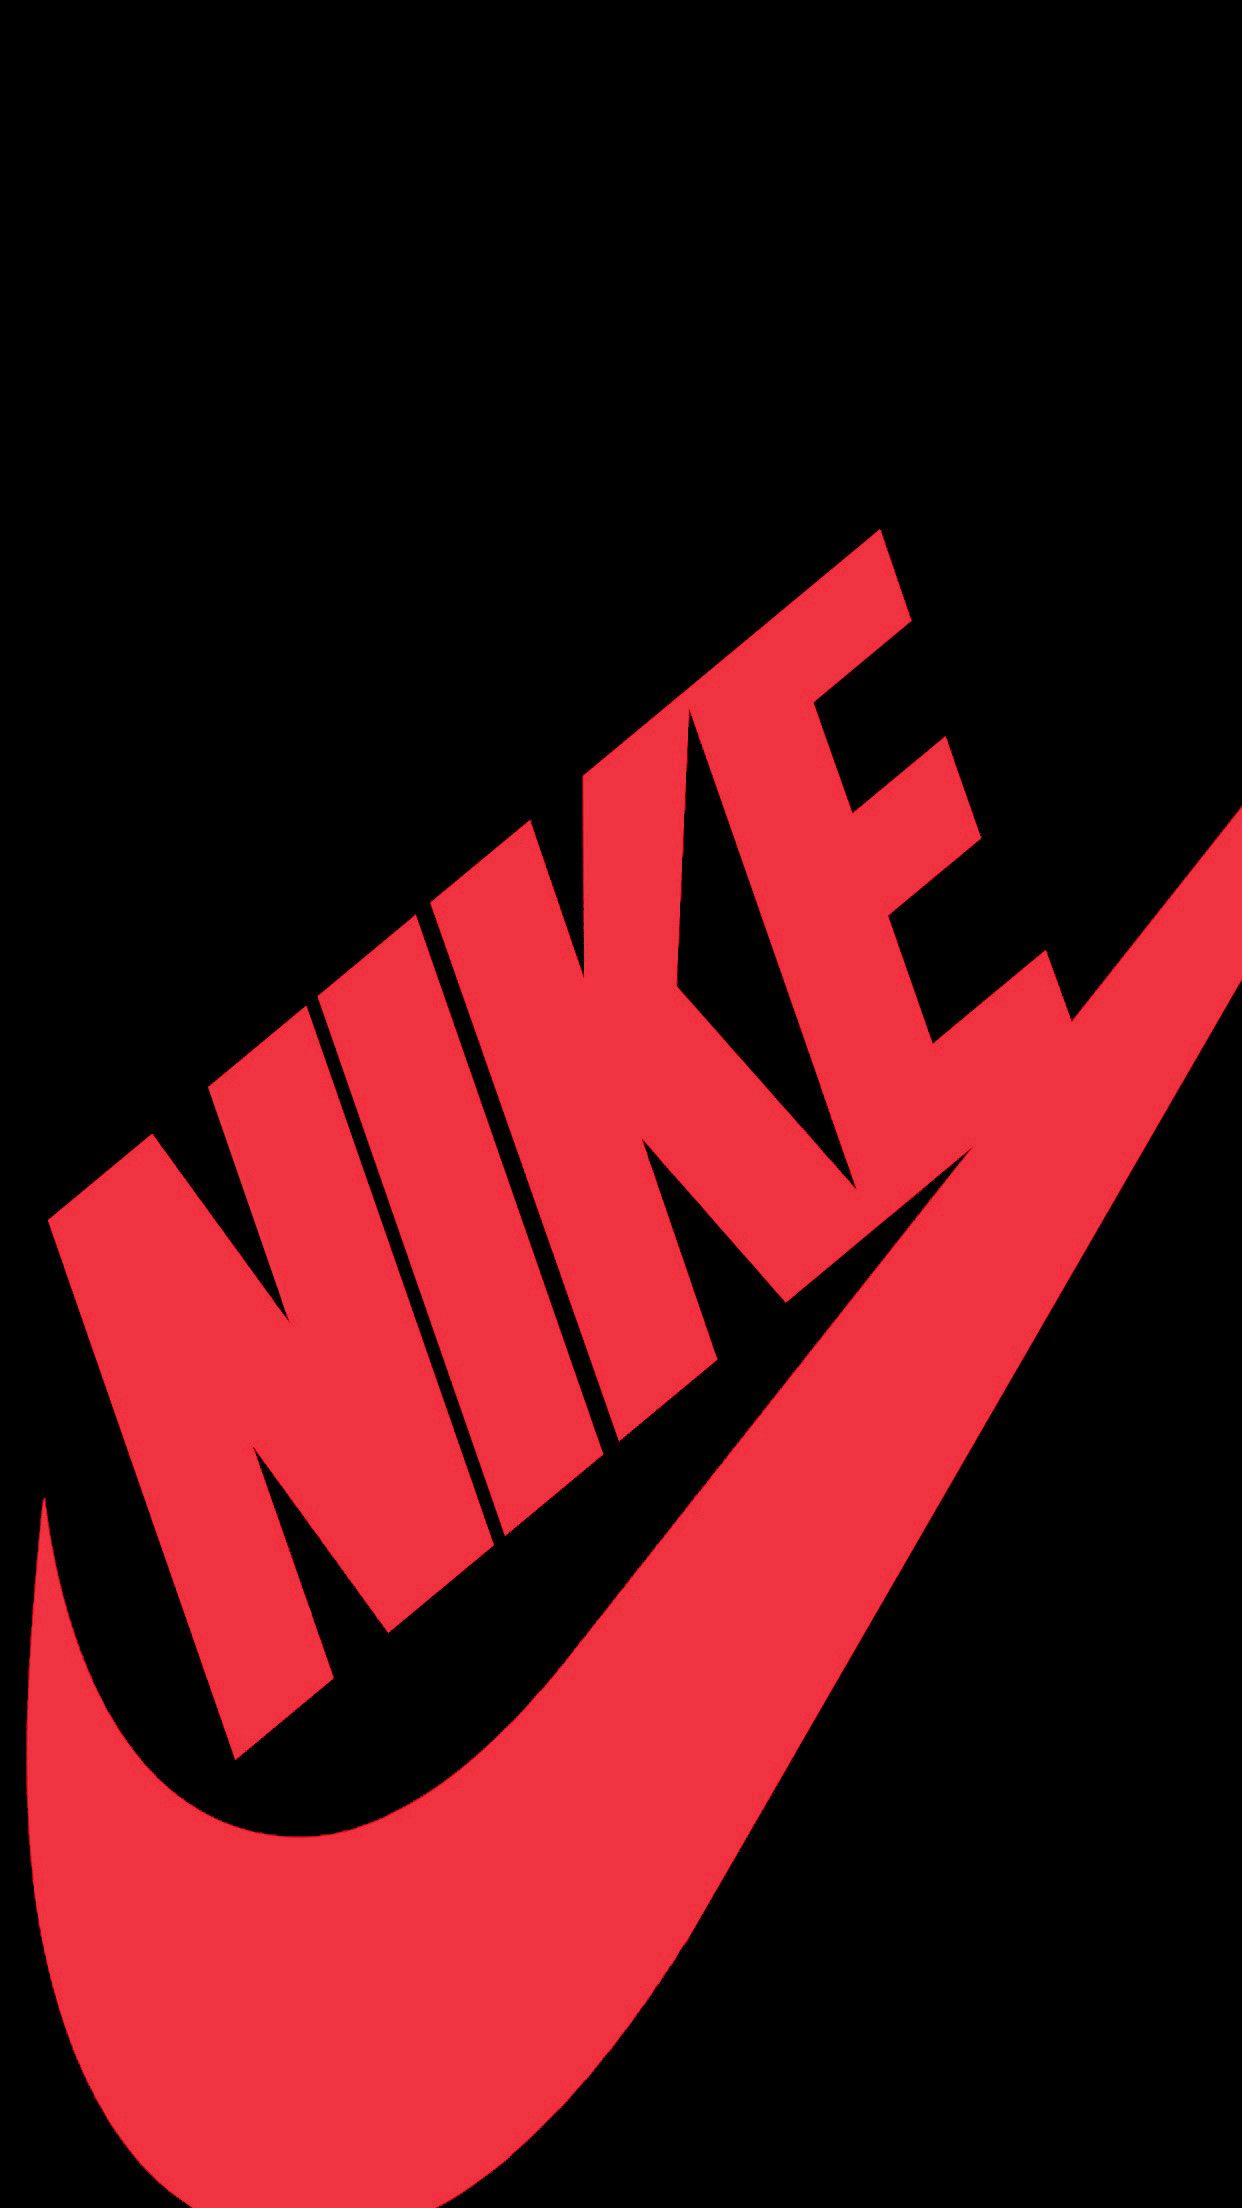 Black Nike Check Wallpapers